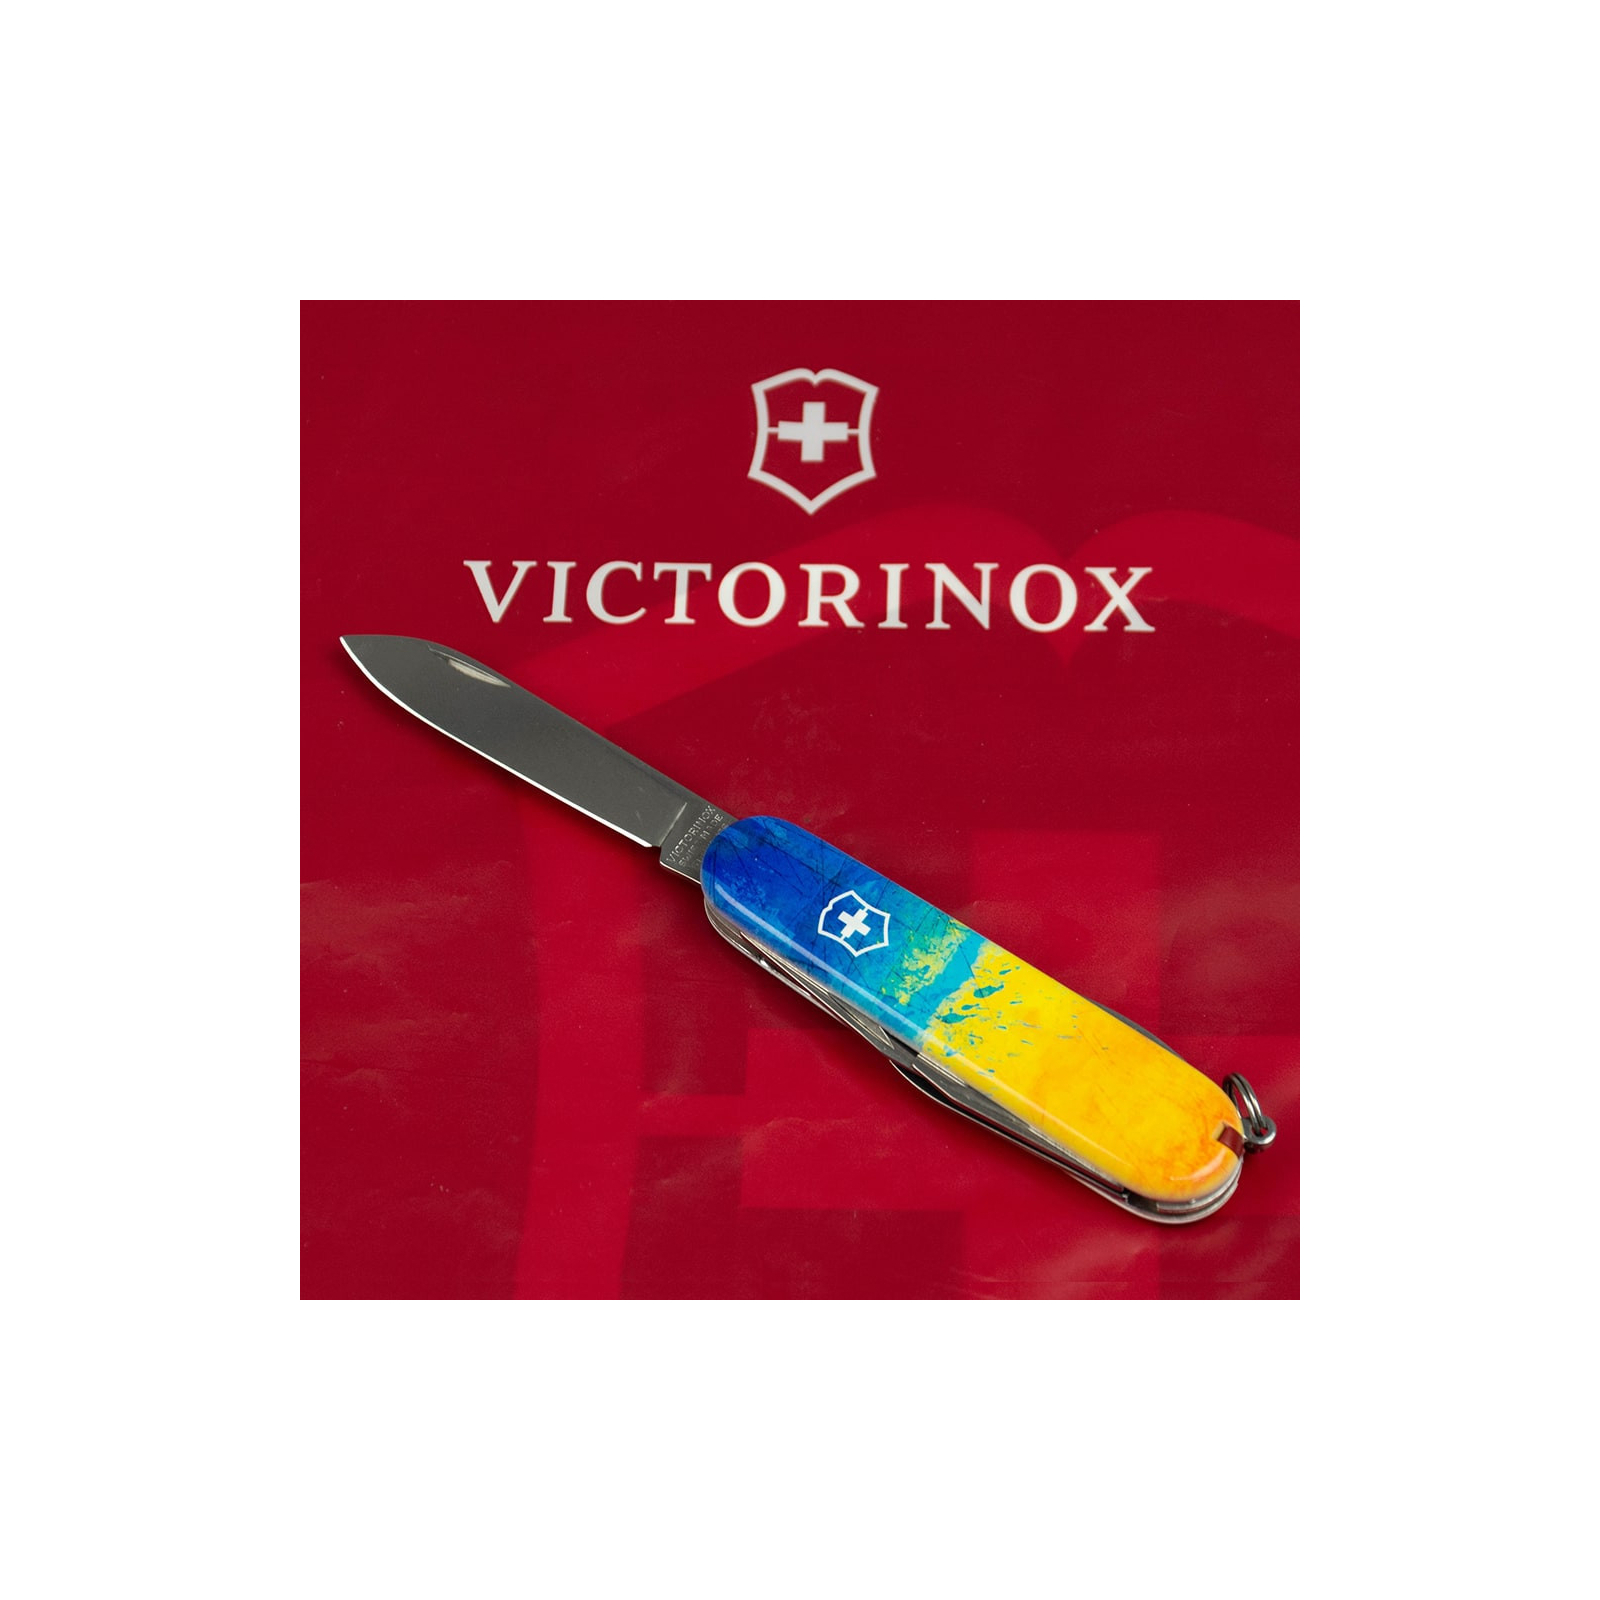 Нож Victorinox Spartan Ukraine 91 мм Жовто-синій малюнок (1.3603.7_T3100p) изображение 5